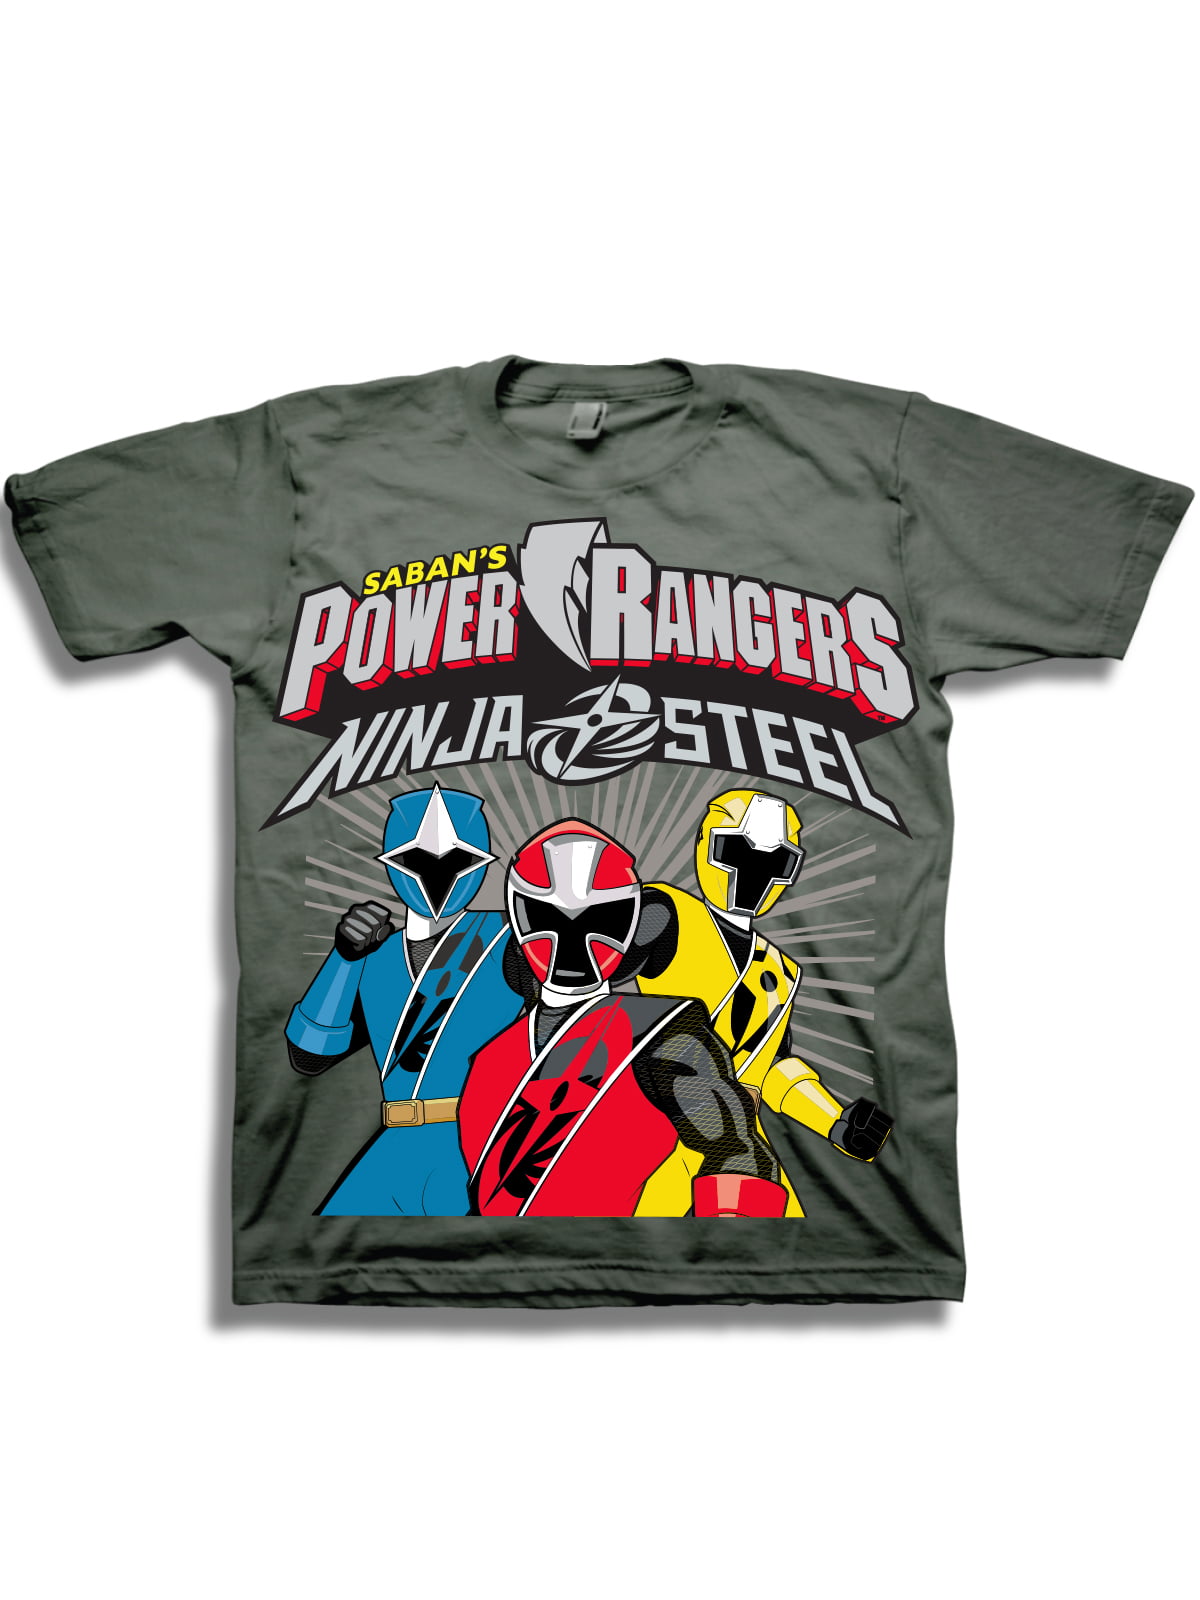 power rangers ninja steel shirt